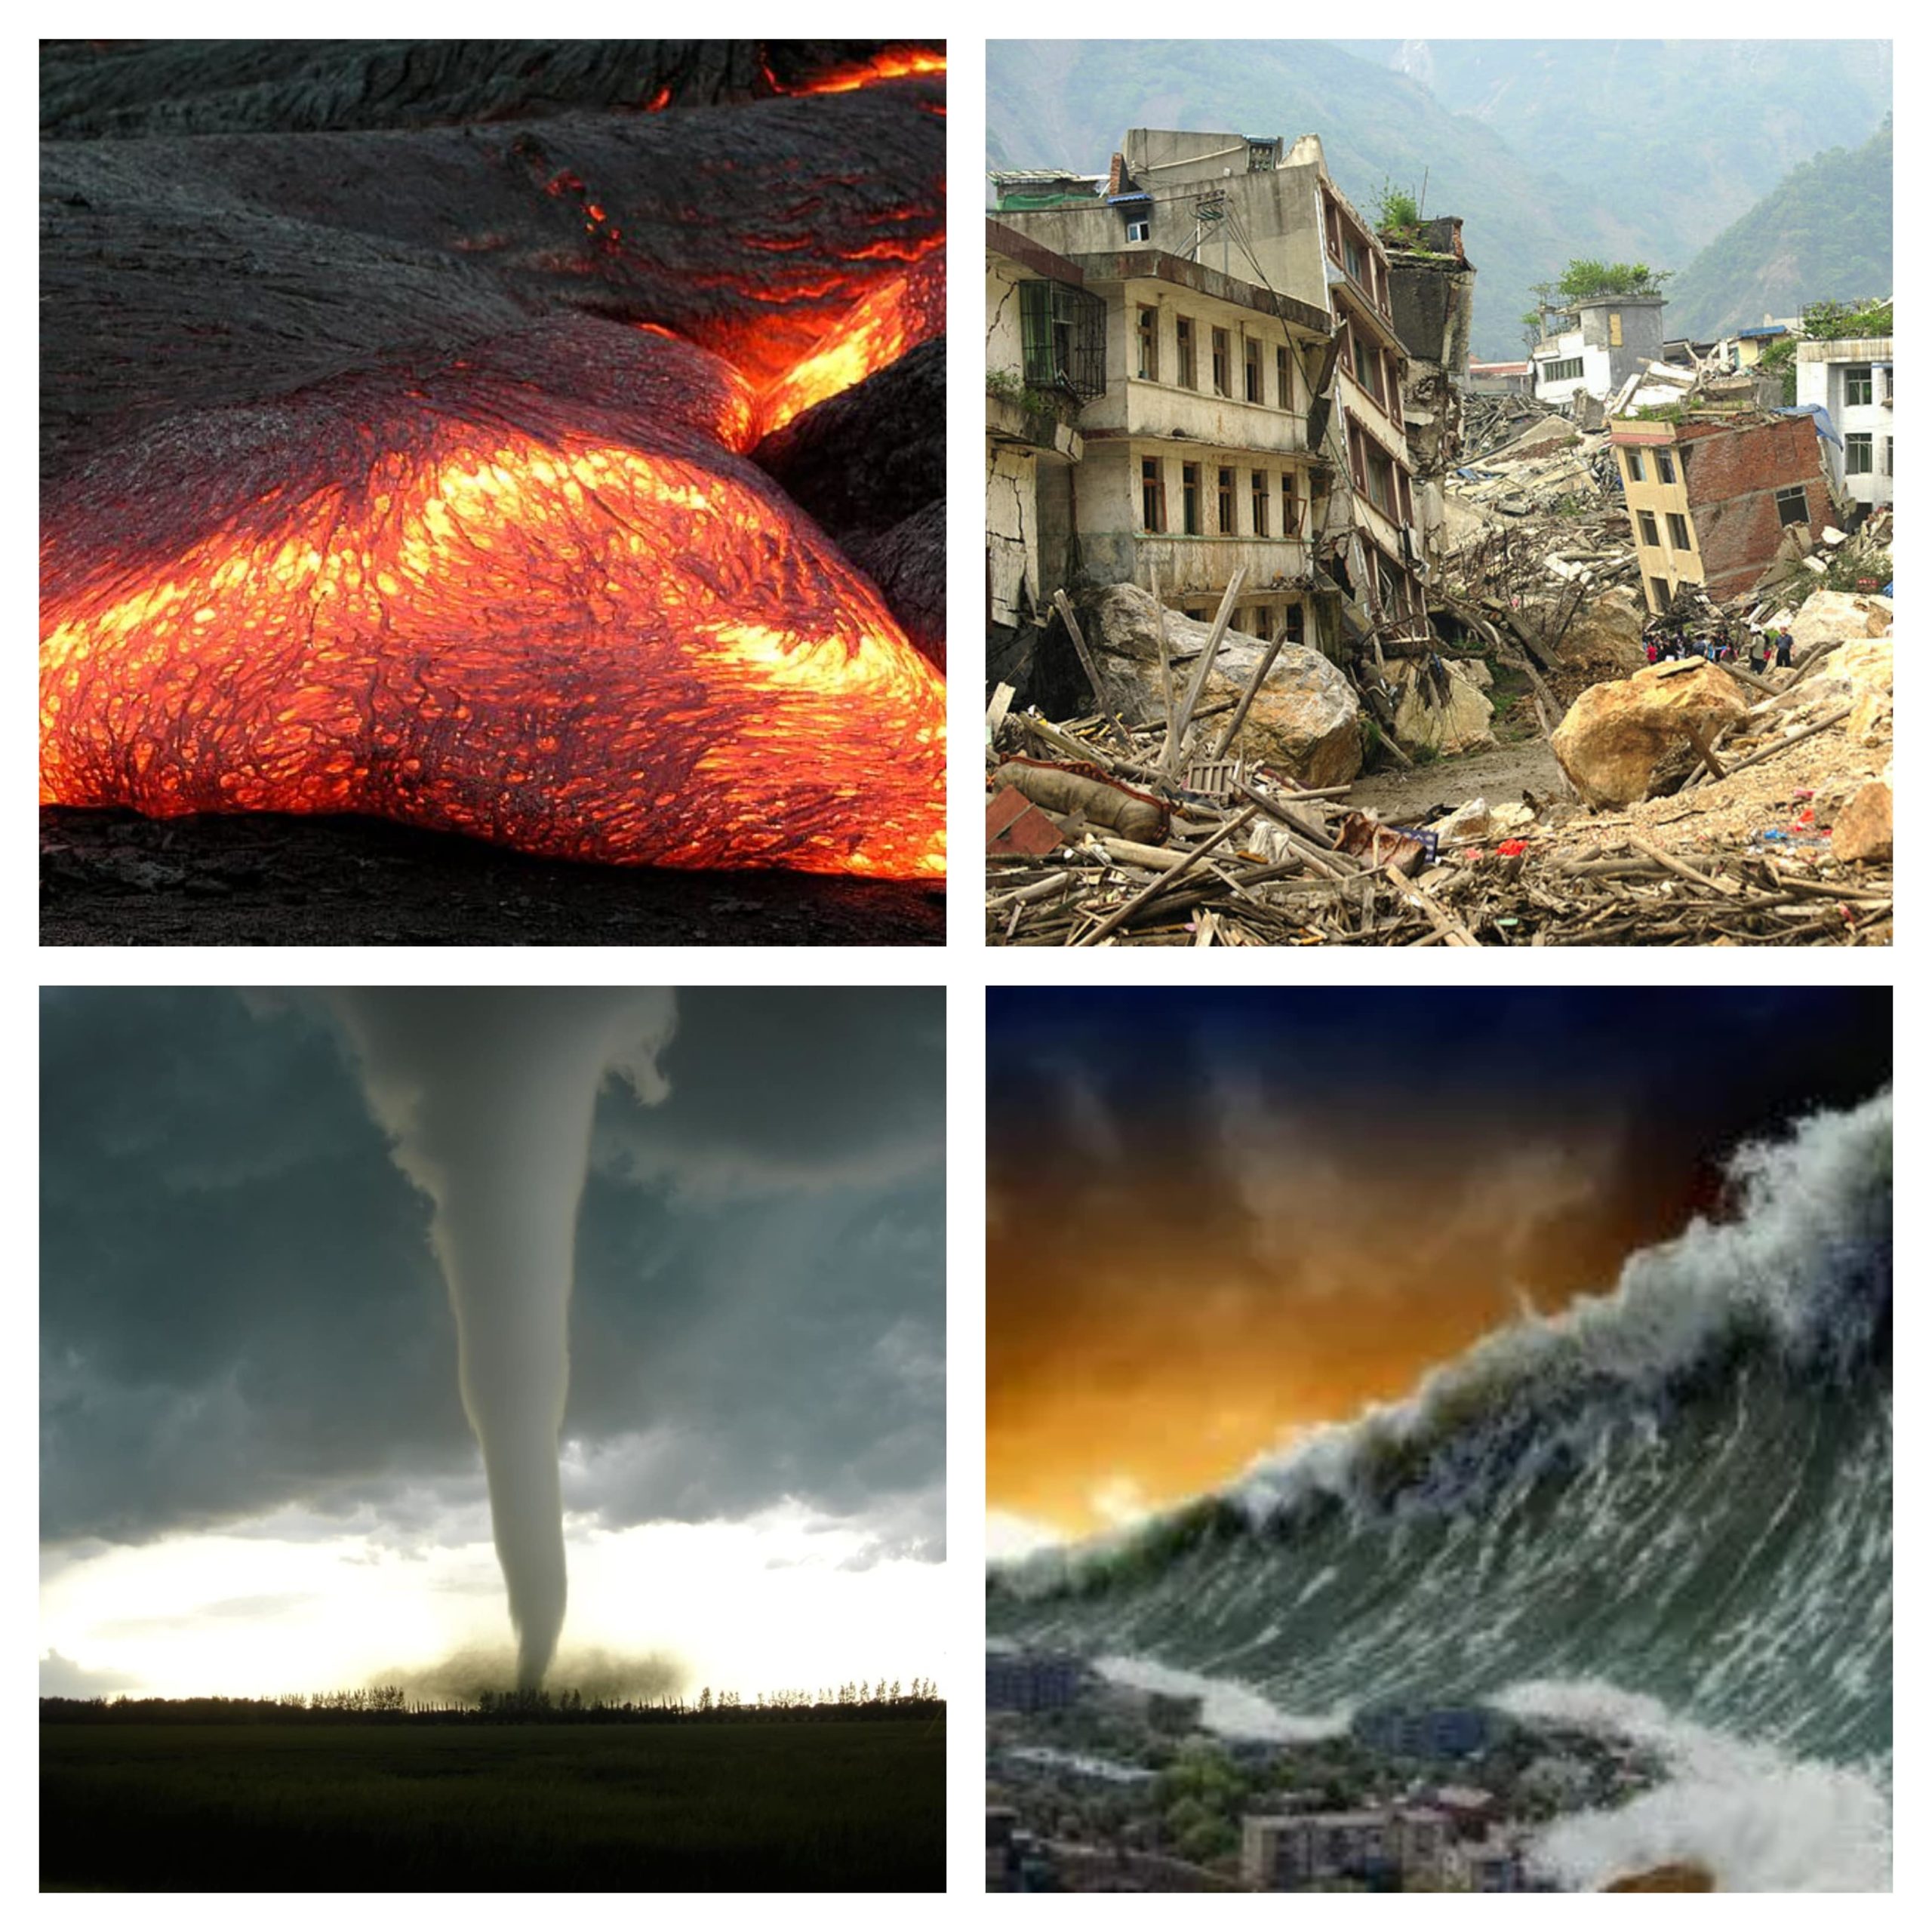 5 natural disasters. Природные катаклизмы. Природные бедствия. Стизх йные бедствия. Катастрофы природного характера.